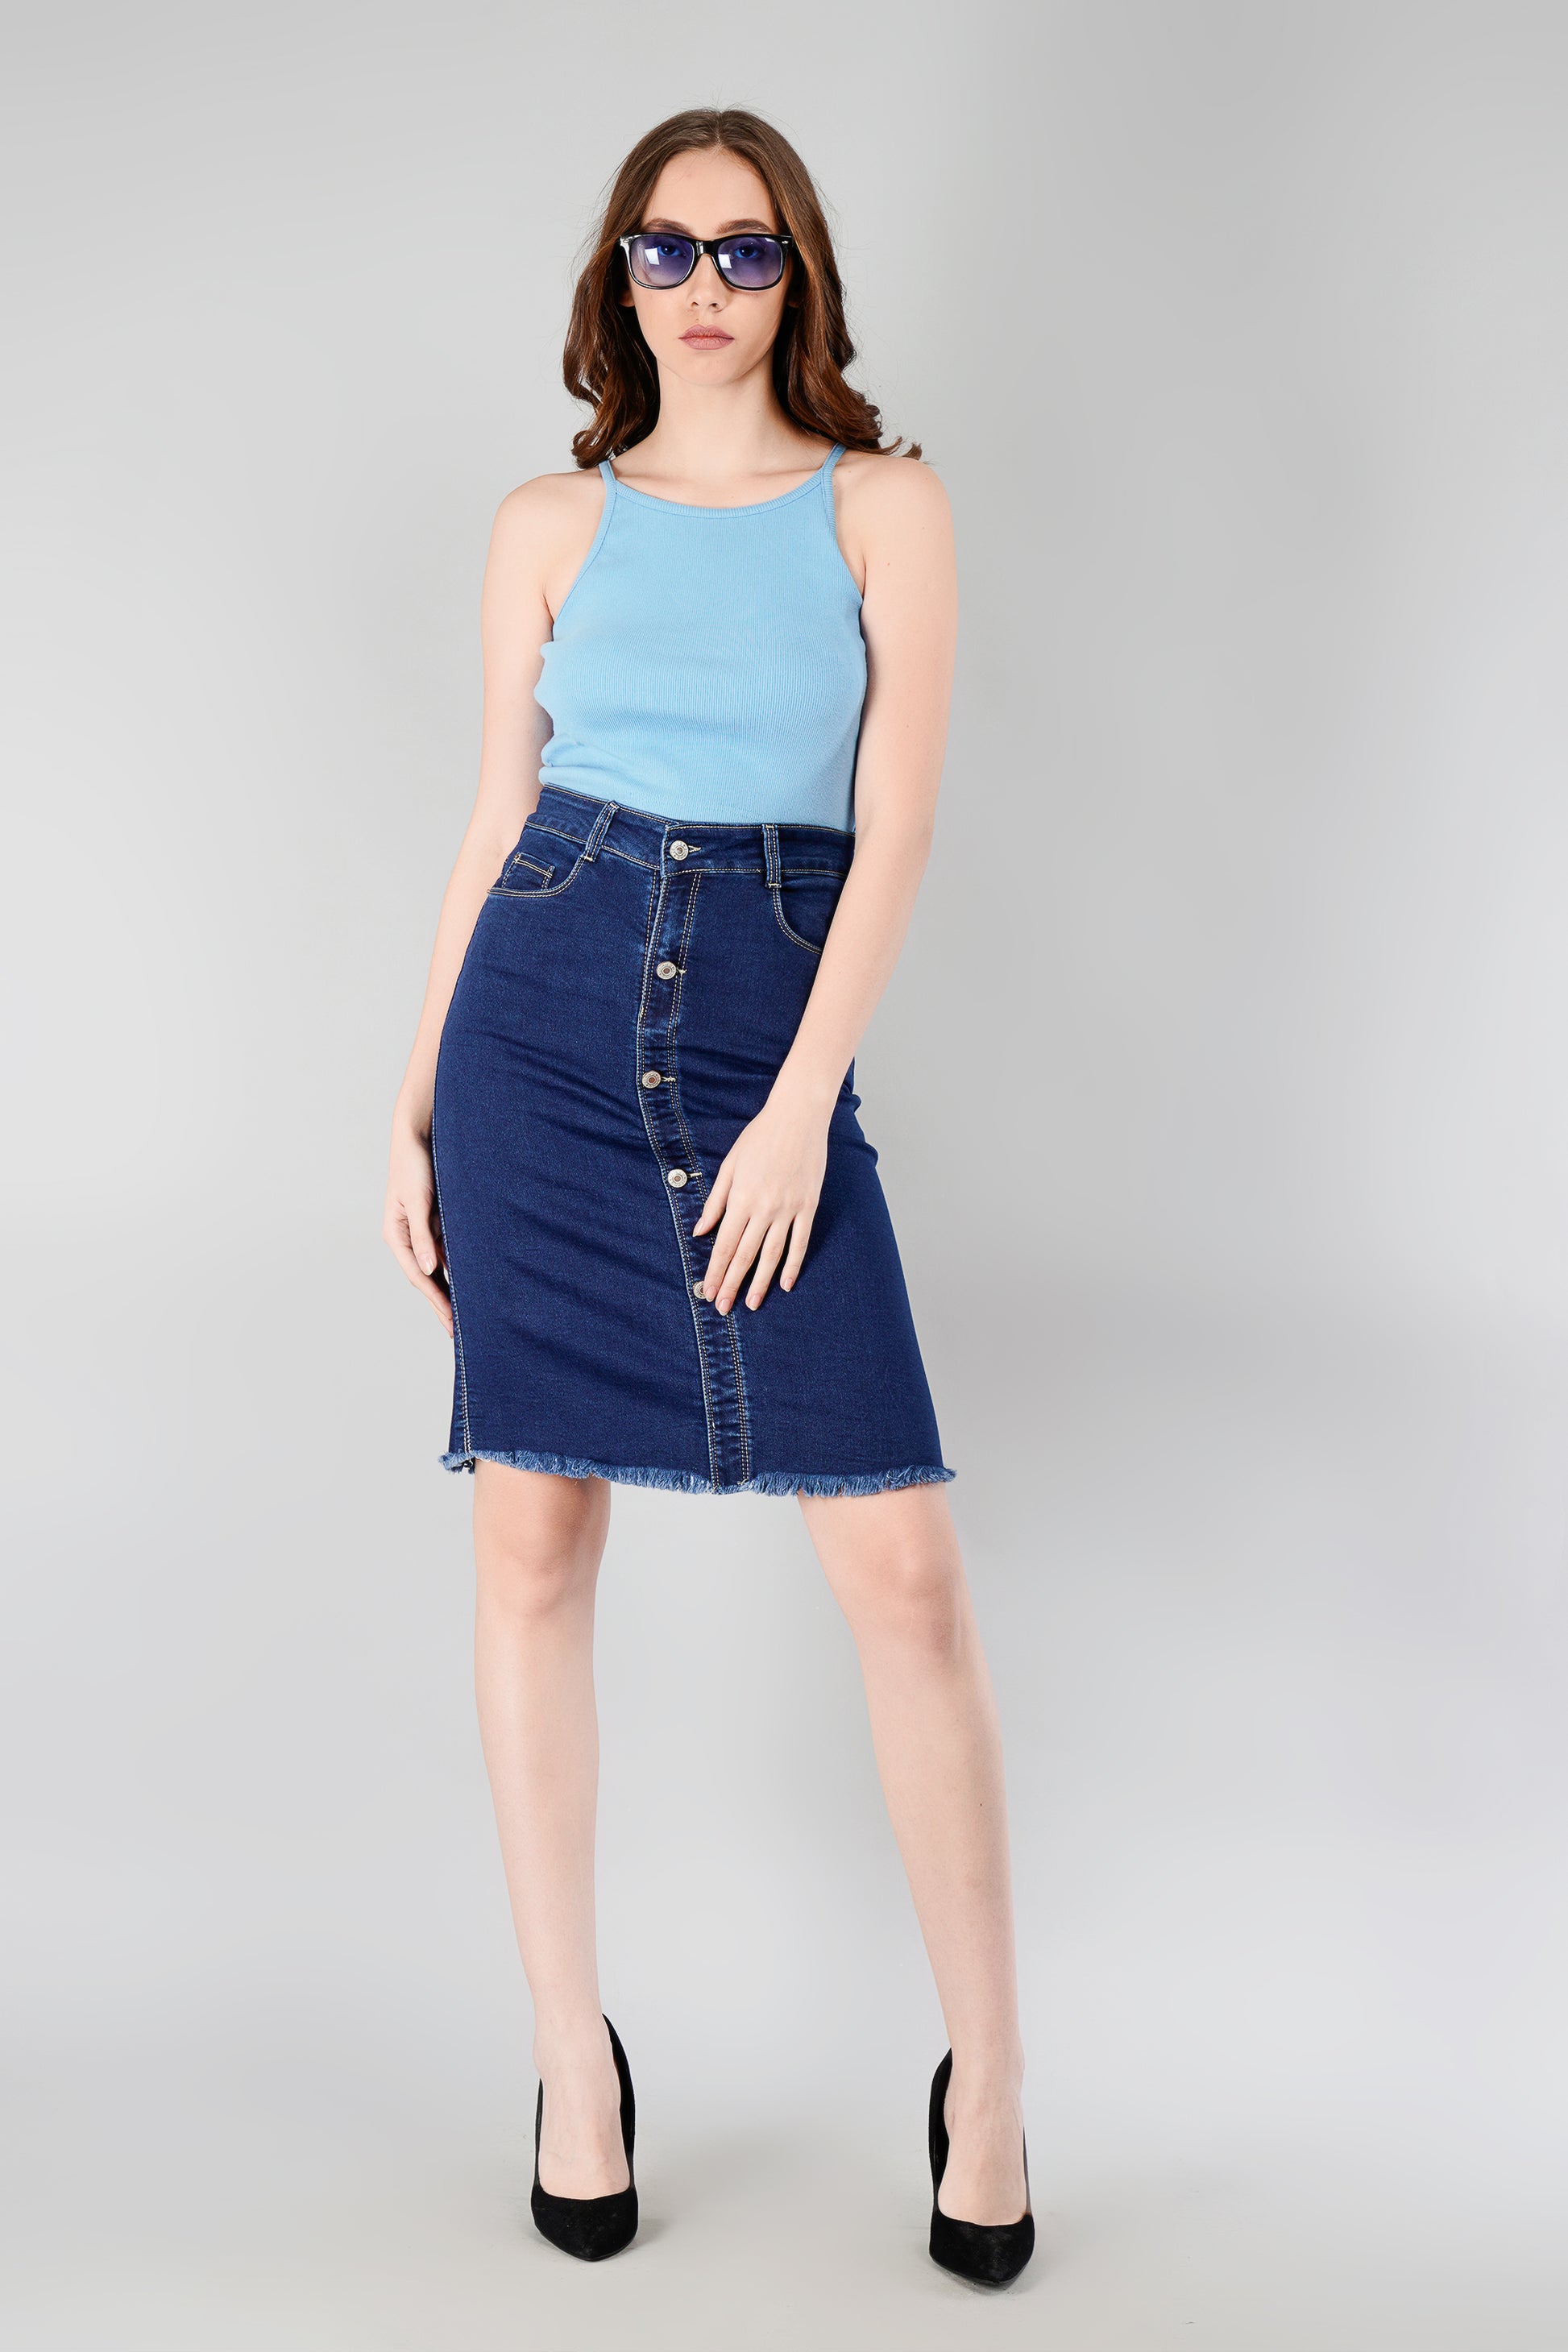 Women's Denim Skirts in Dark Blue by Be Simple